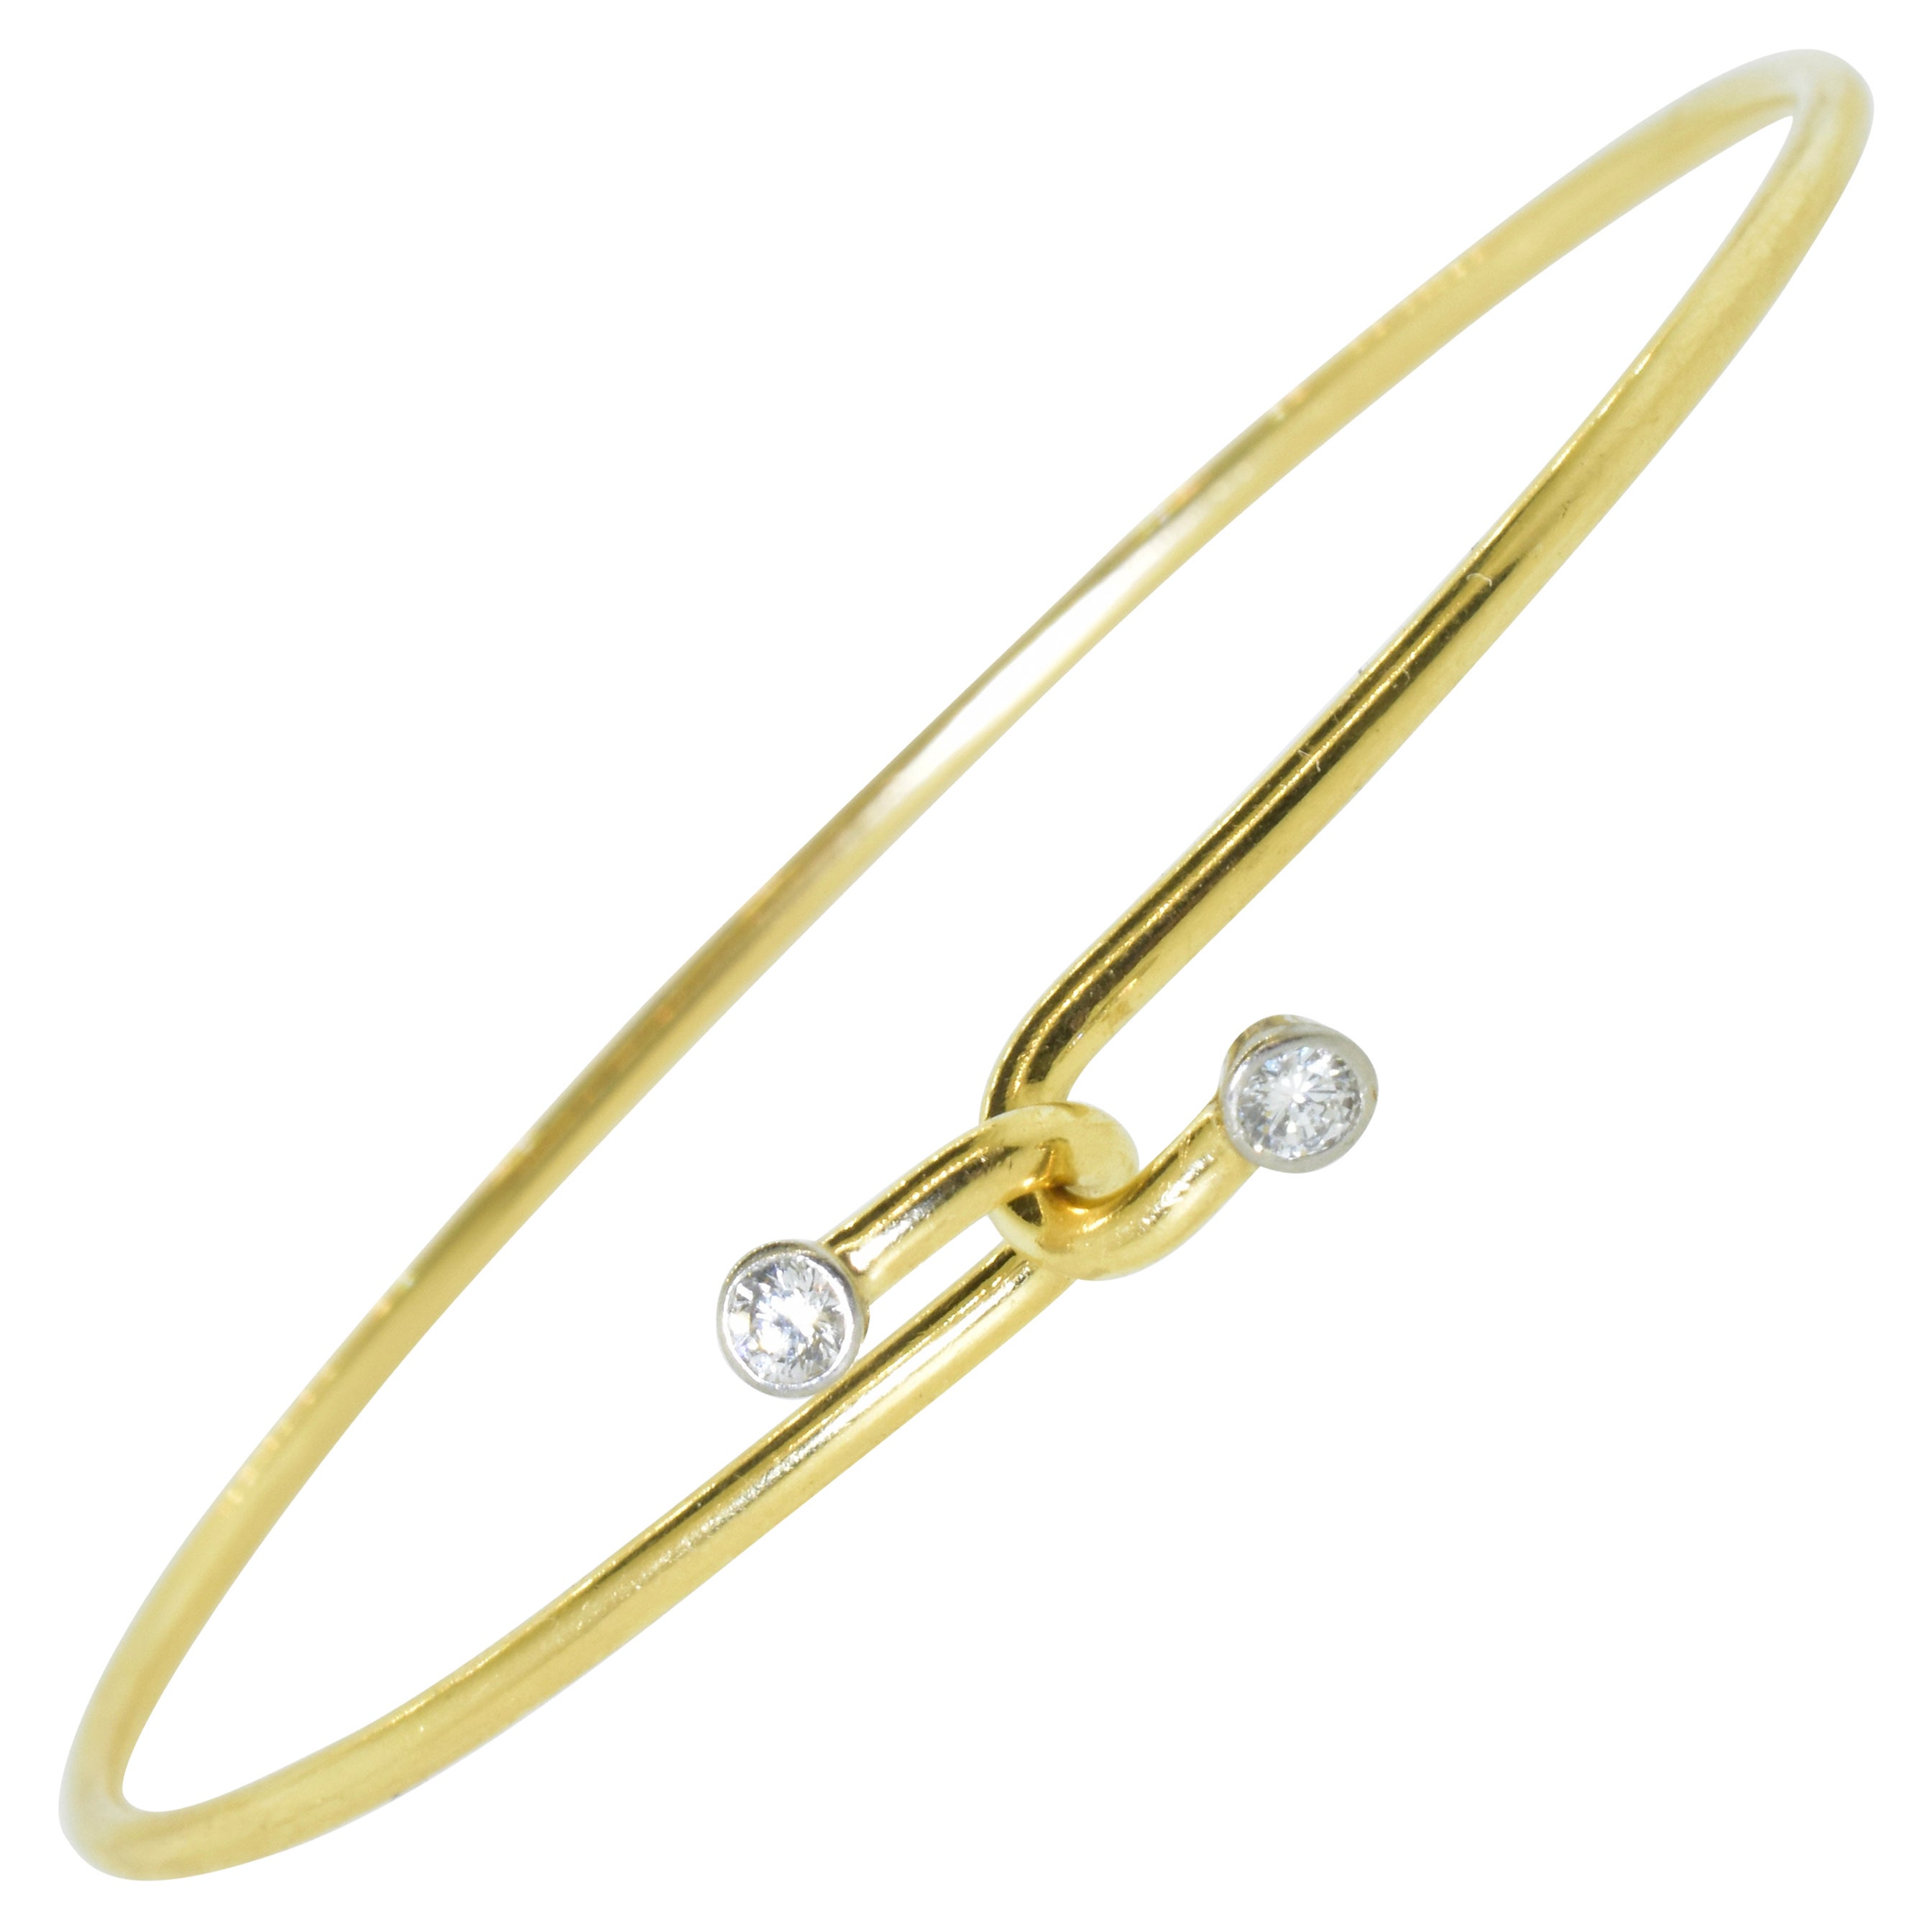 Tiffany & Co. Gold and Diamond Bracelet